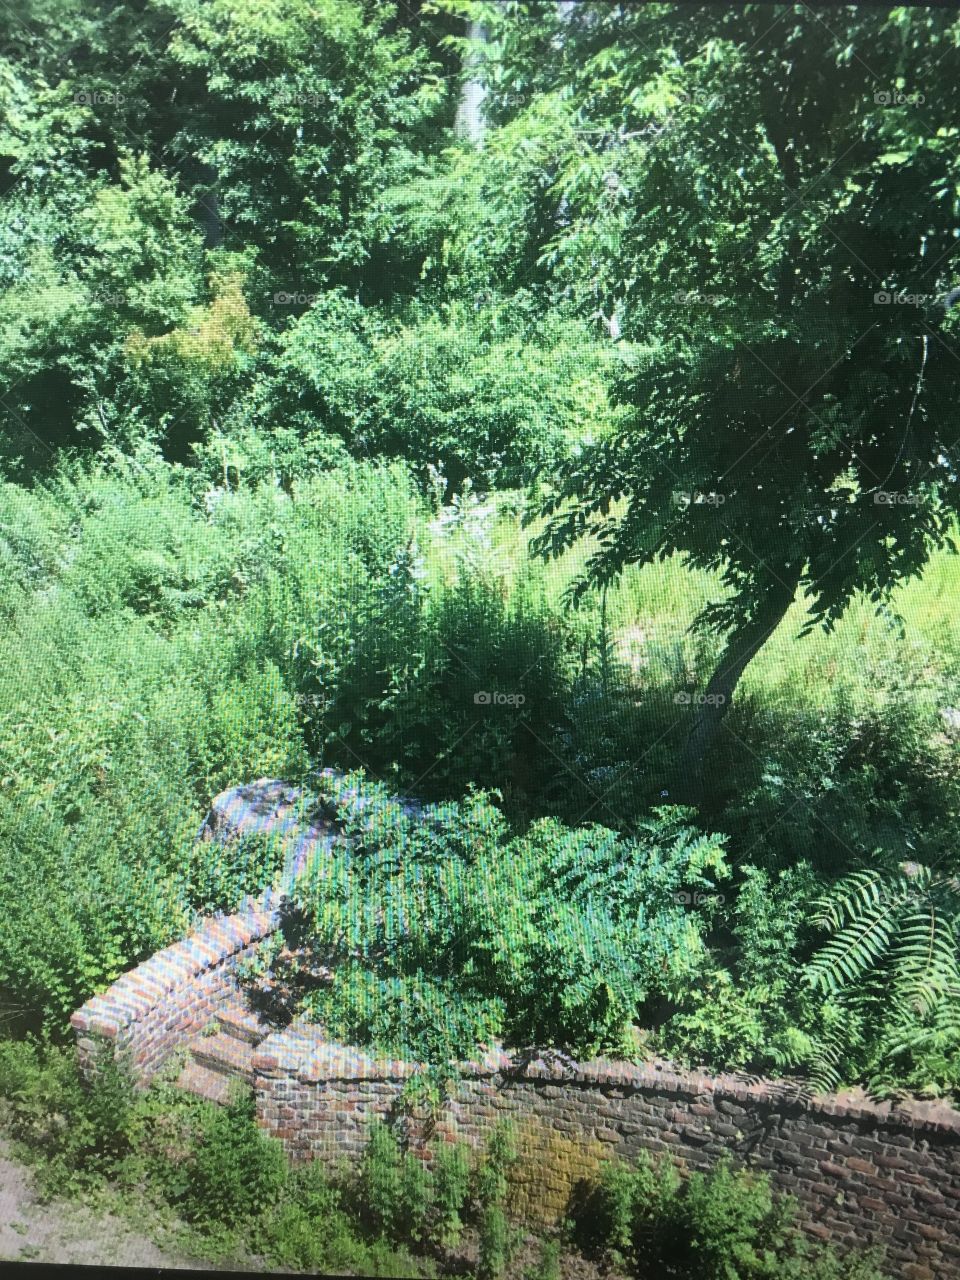 Long Island New York garden. So much green!